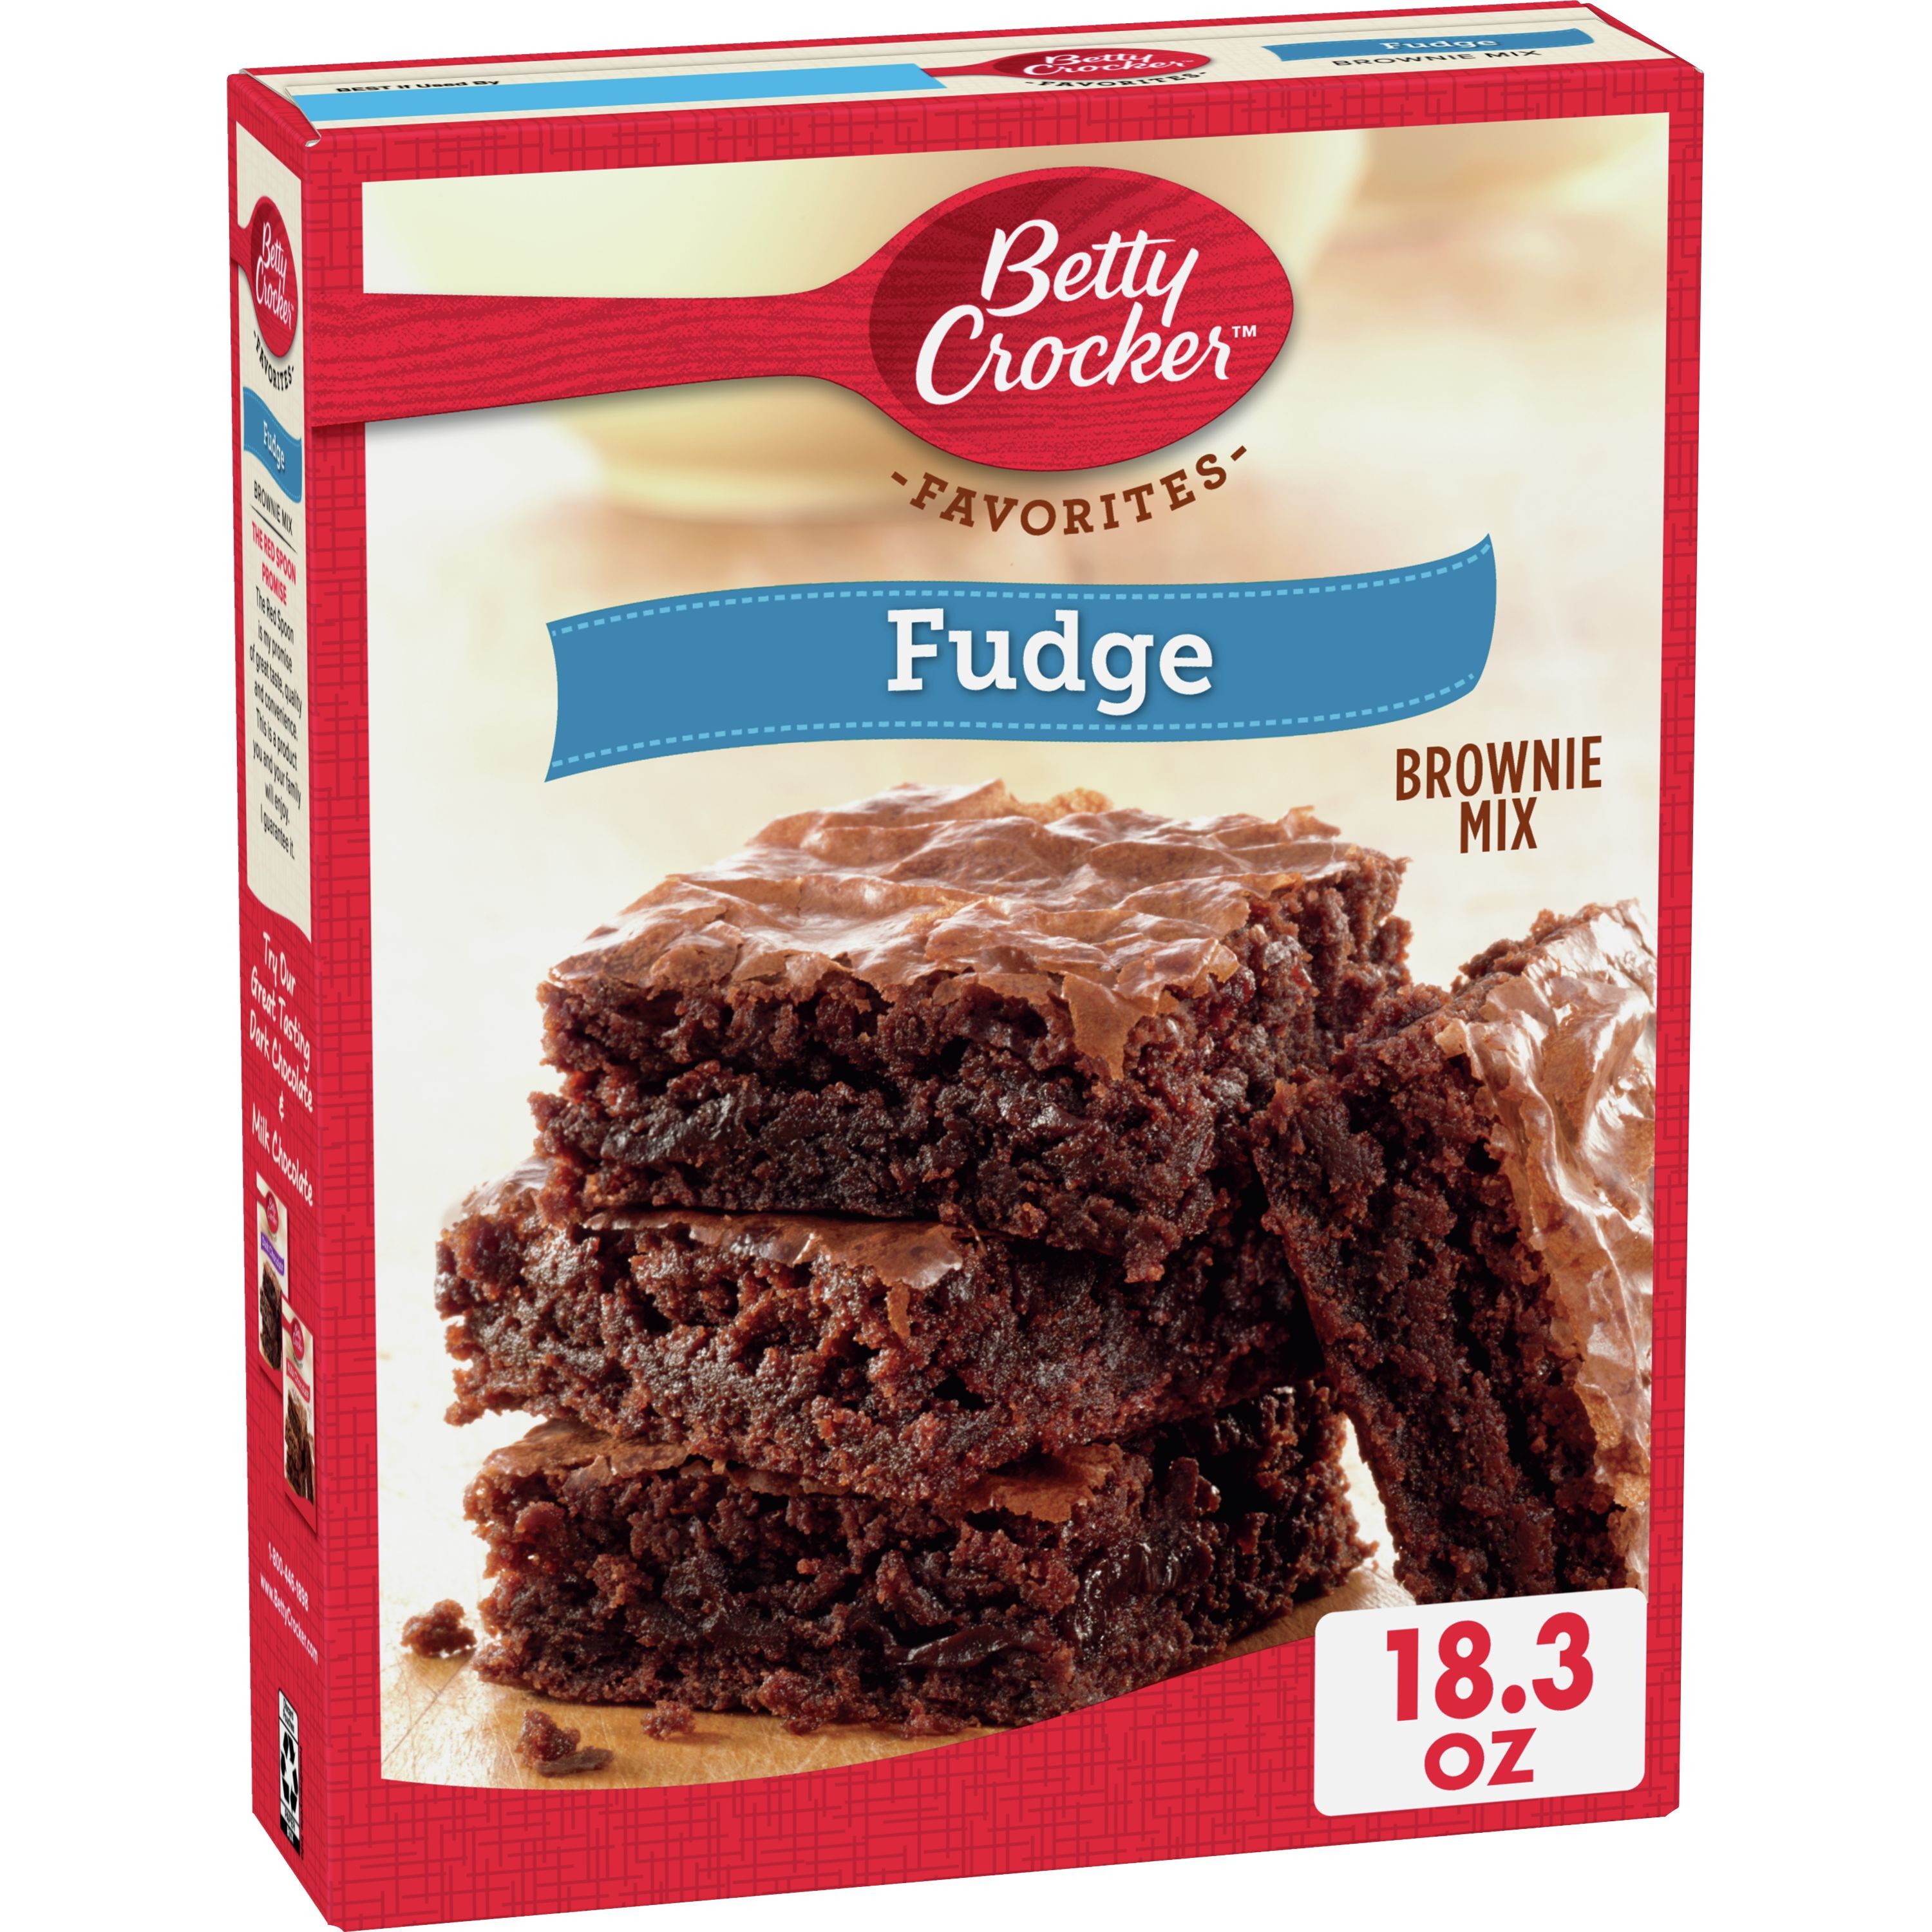 Betty Crocker Fudge Brownie Mix, Family Size, 18.3 oz - image 1 of 10